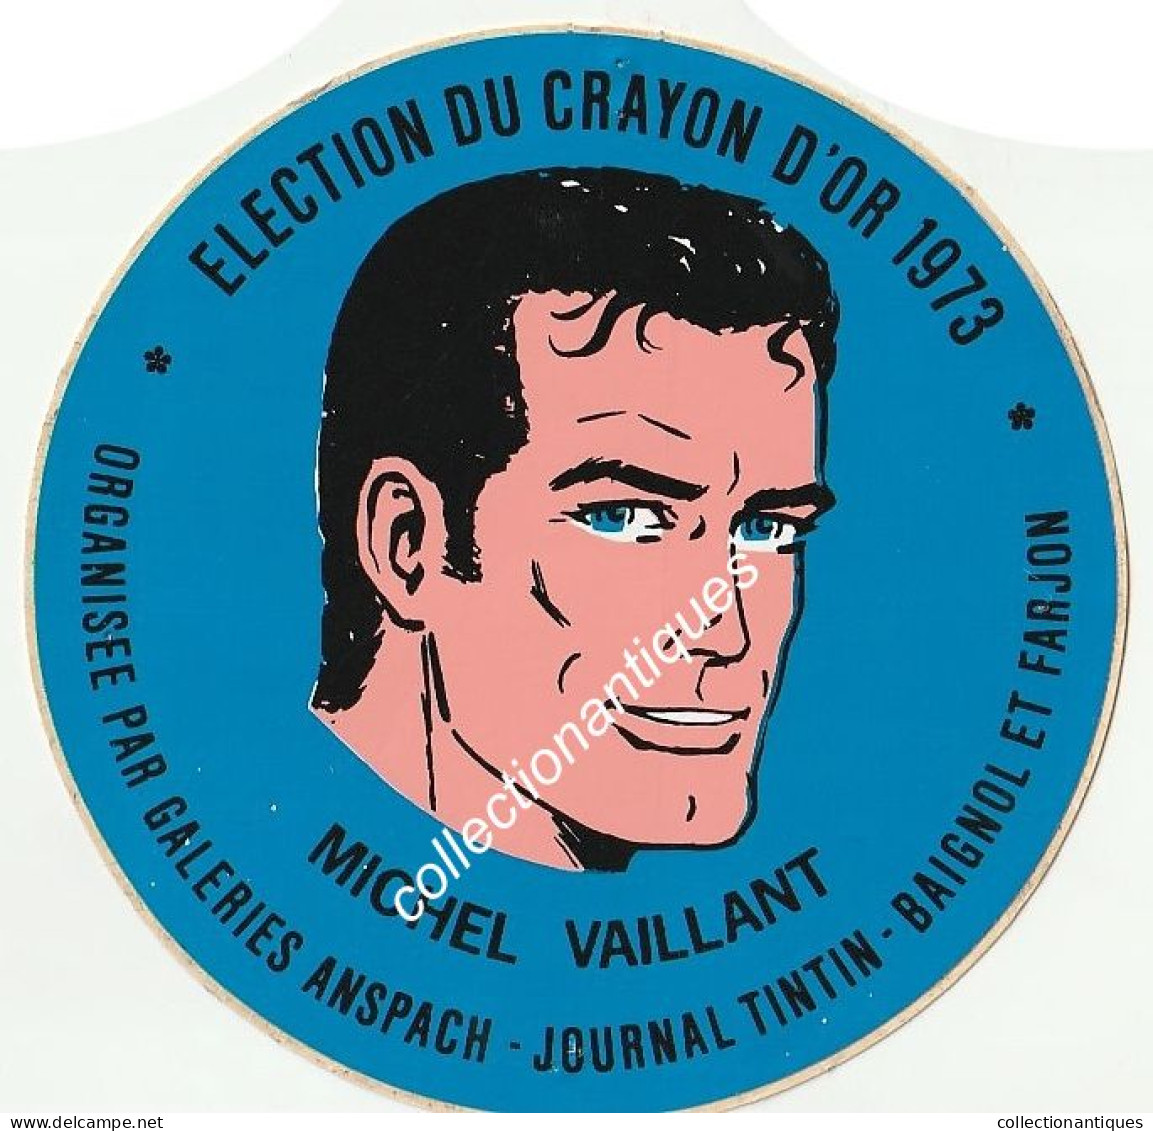 Michel Vaillant RARE Sticker Autocollant Election Du Crayon D'Or 1973 Galeries Anspach Journal Tintin Baignol Et Farjon - Autocolantes